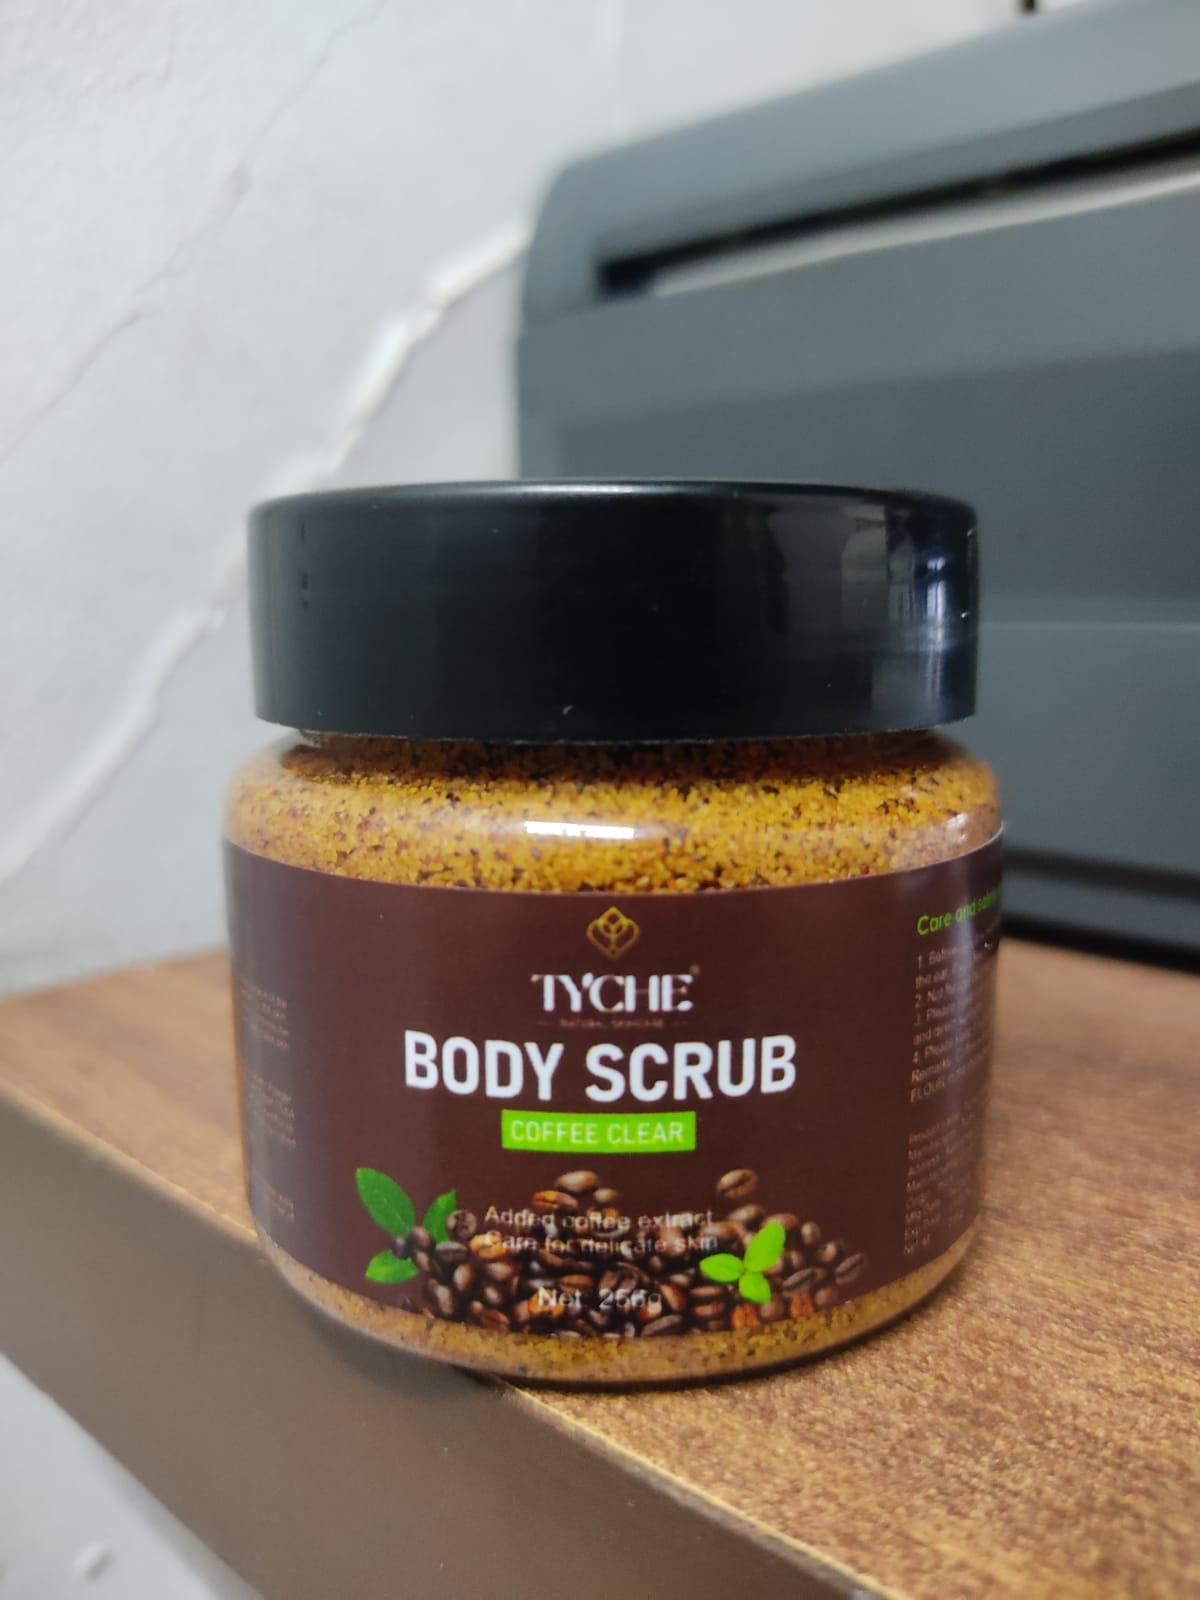 Tyche Coffee Clear Body Scrub - For Face & Body (256g)